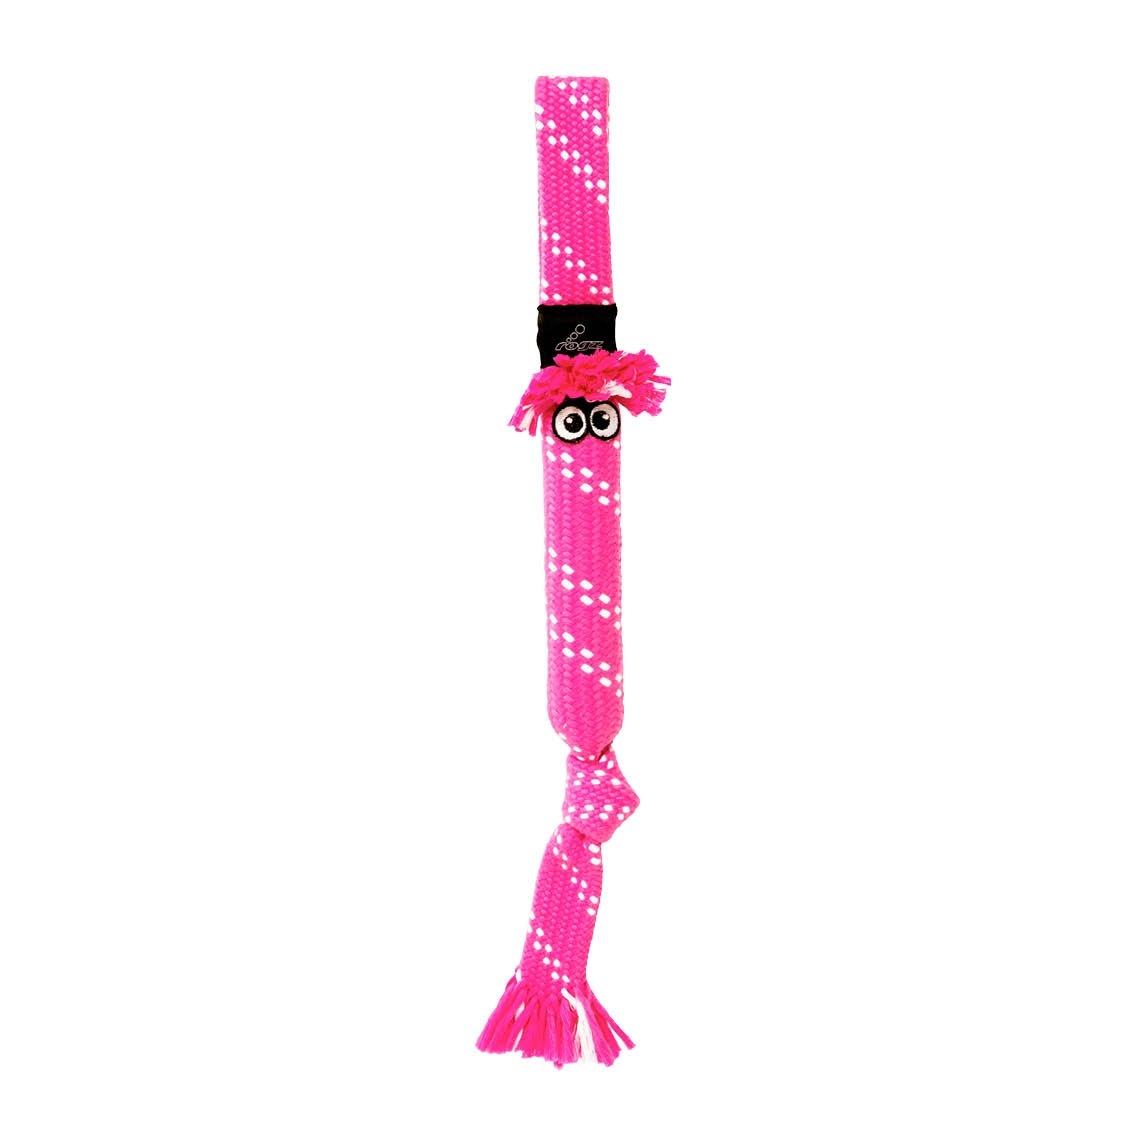 Rogz Rogz игрушка веревочная шуршащая SCRUBZ, розовый (S) игрушка для собак rogz scrubz l веревочная шуршащая сосиска лайм 540 мм